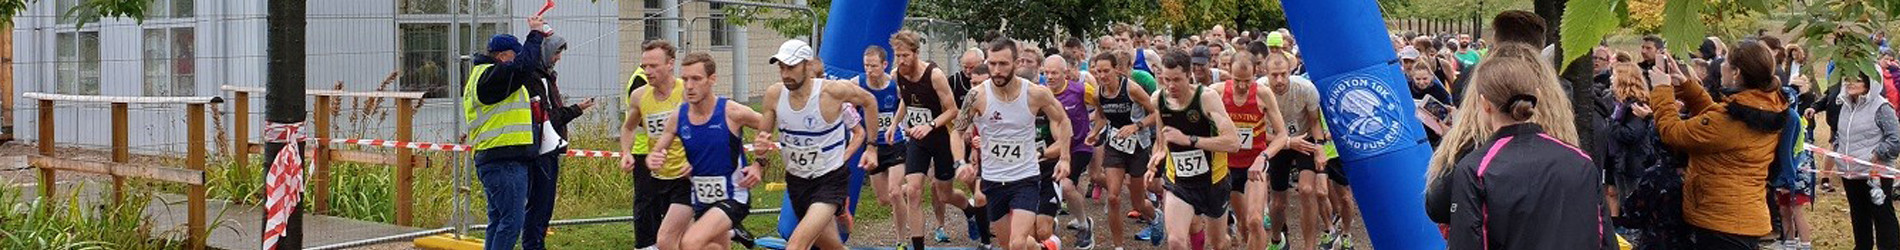 Abington Festival of Running